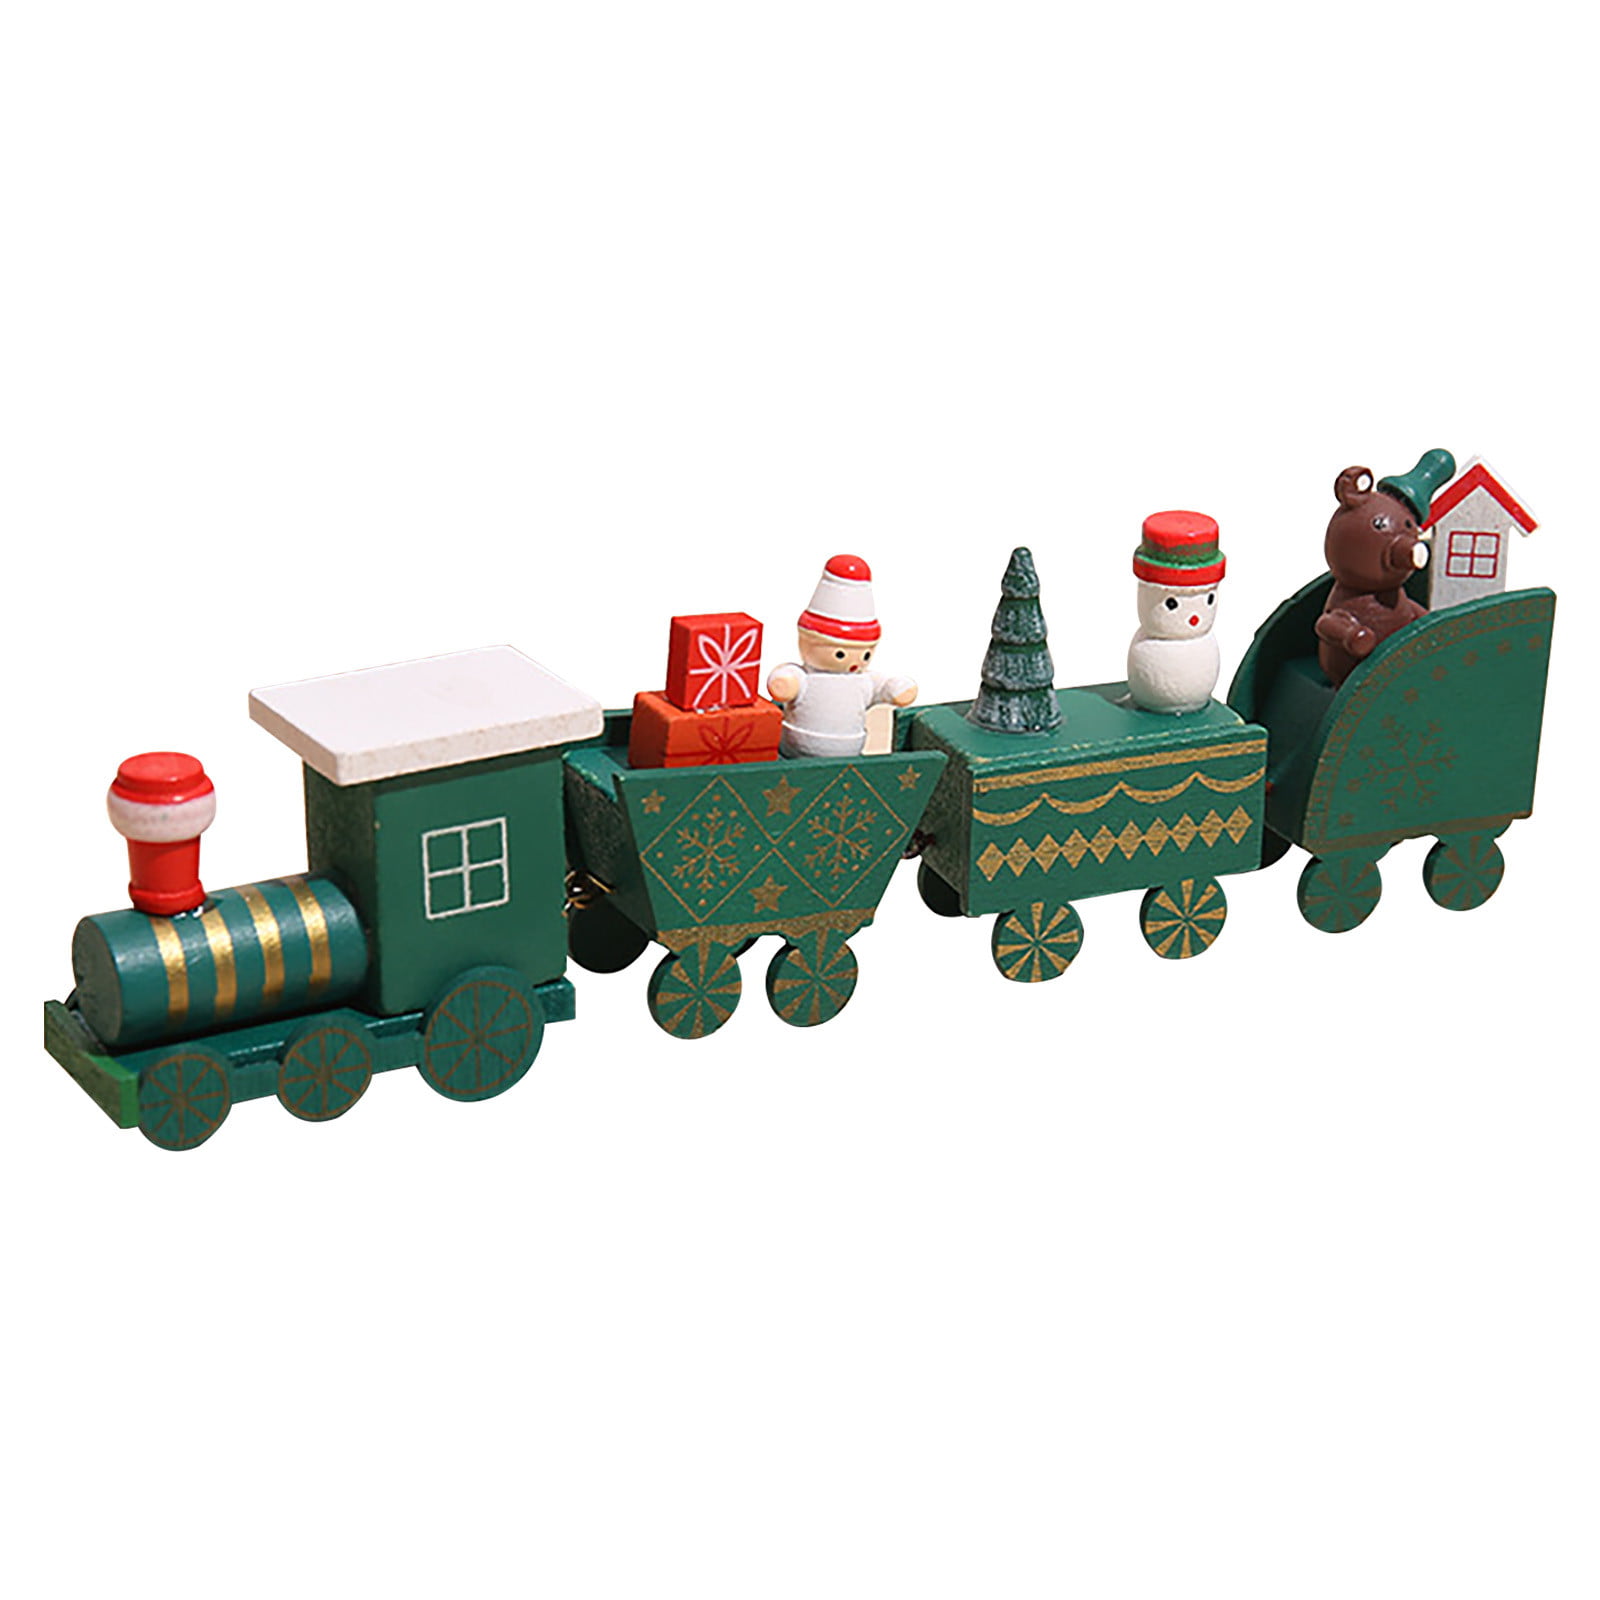 New Christmas Wooden Train Santa Claus Xmas Festival Ornament Home Decor Gifts 